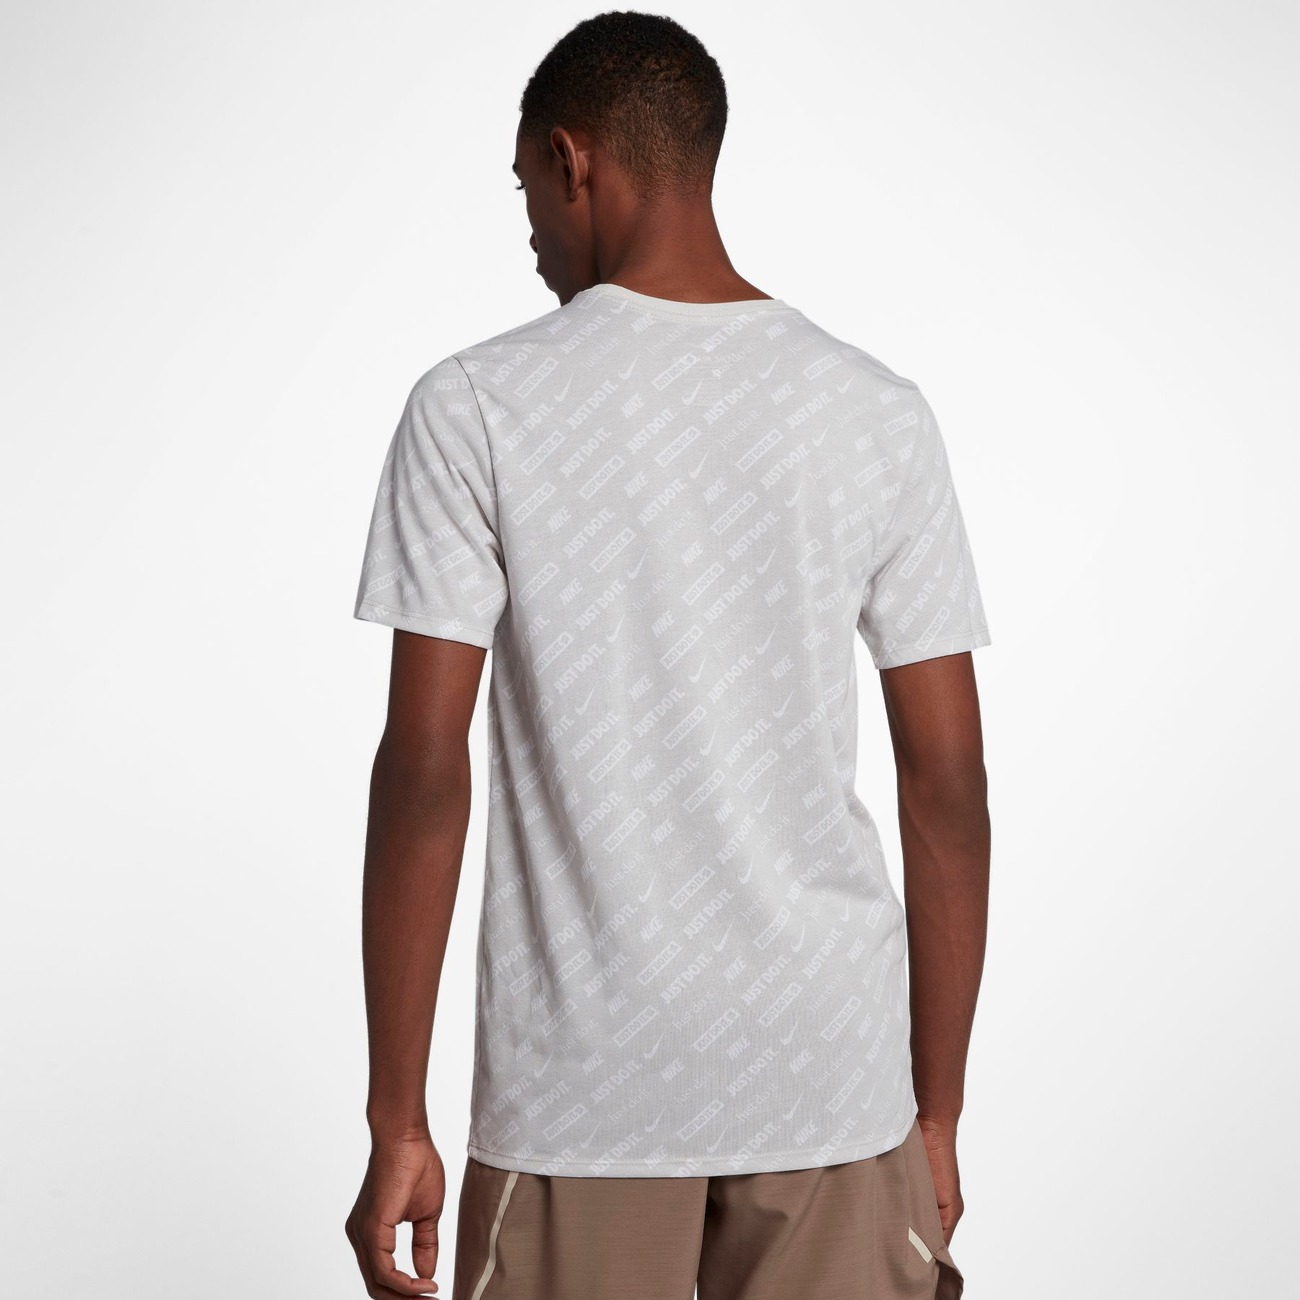 Camiseta Nike Dri-Fit Masculina - Foto 2